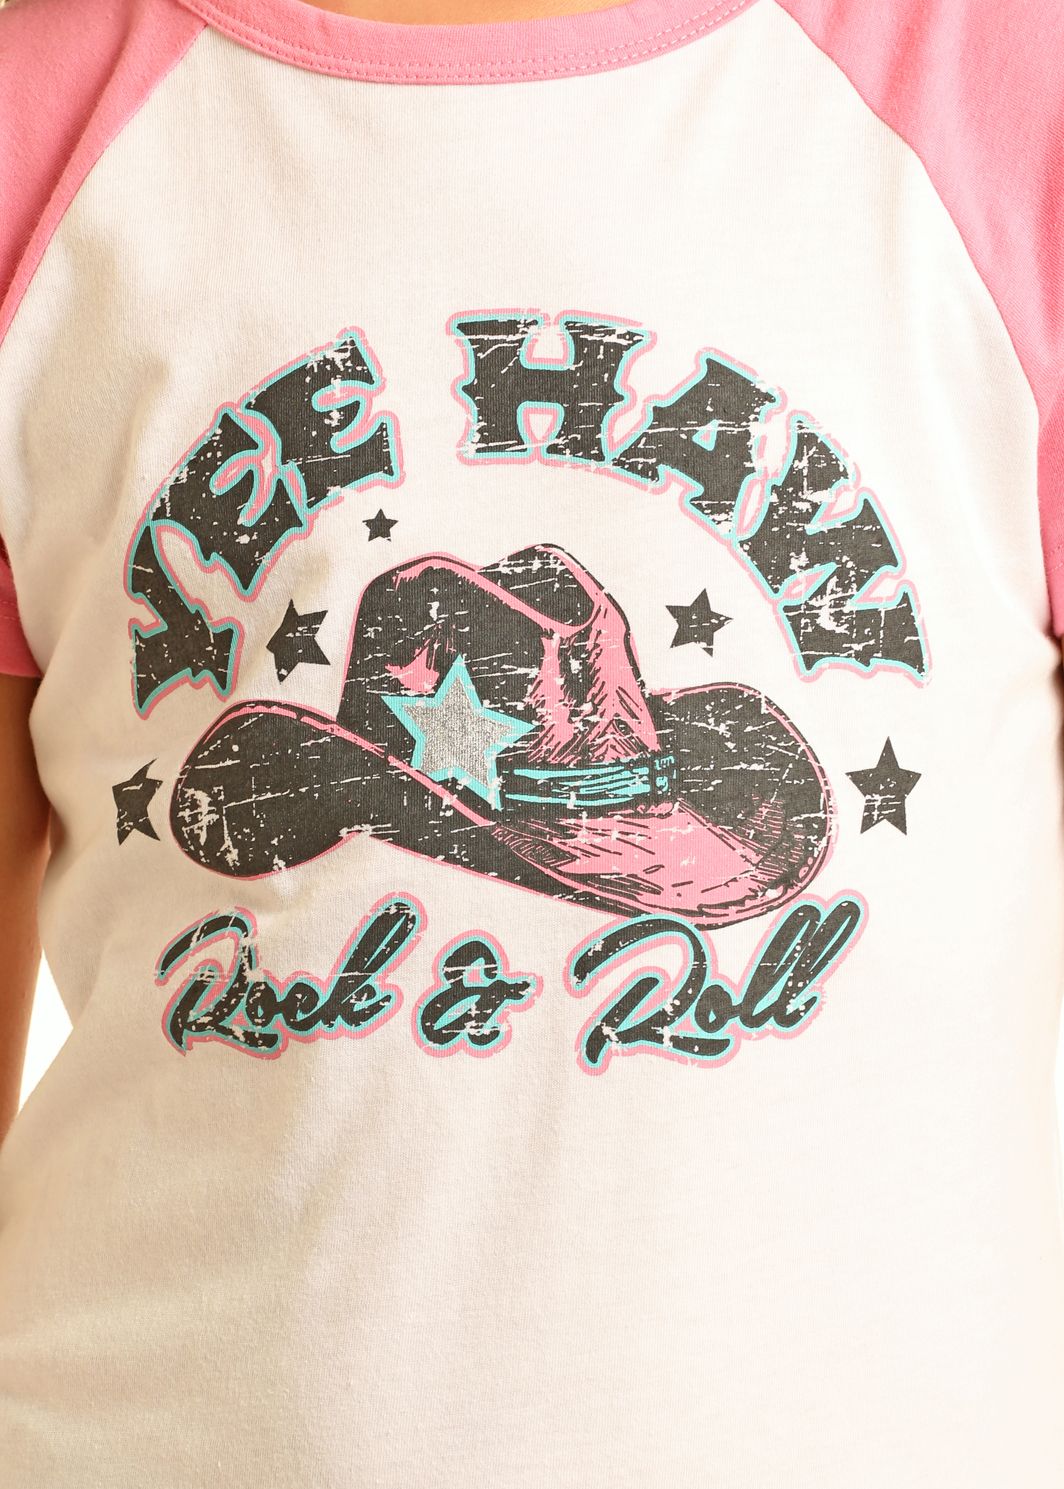 Rock & Roll Girls Yee Haw Graphic Tee Shirt